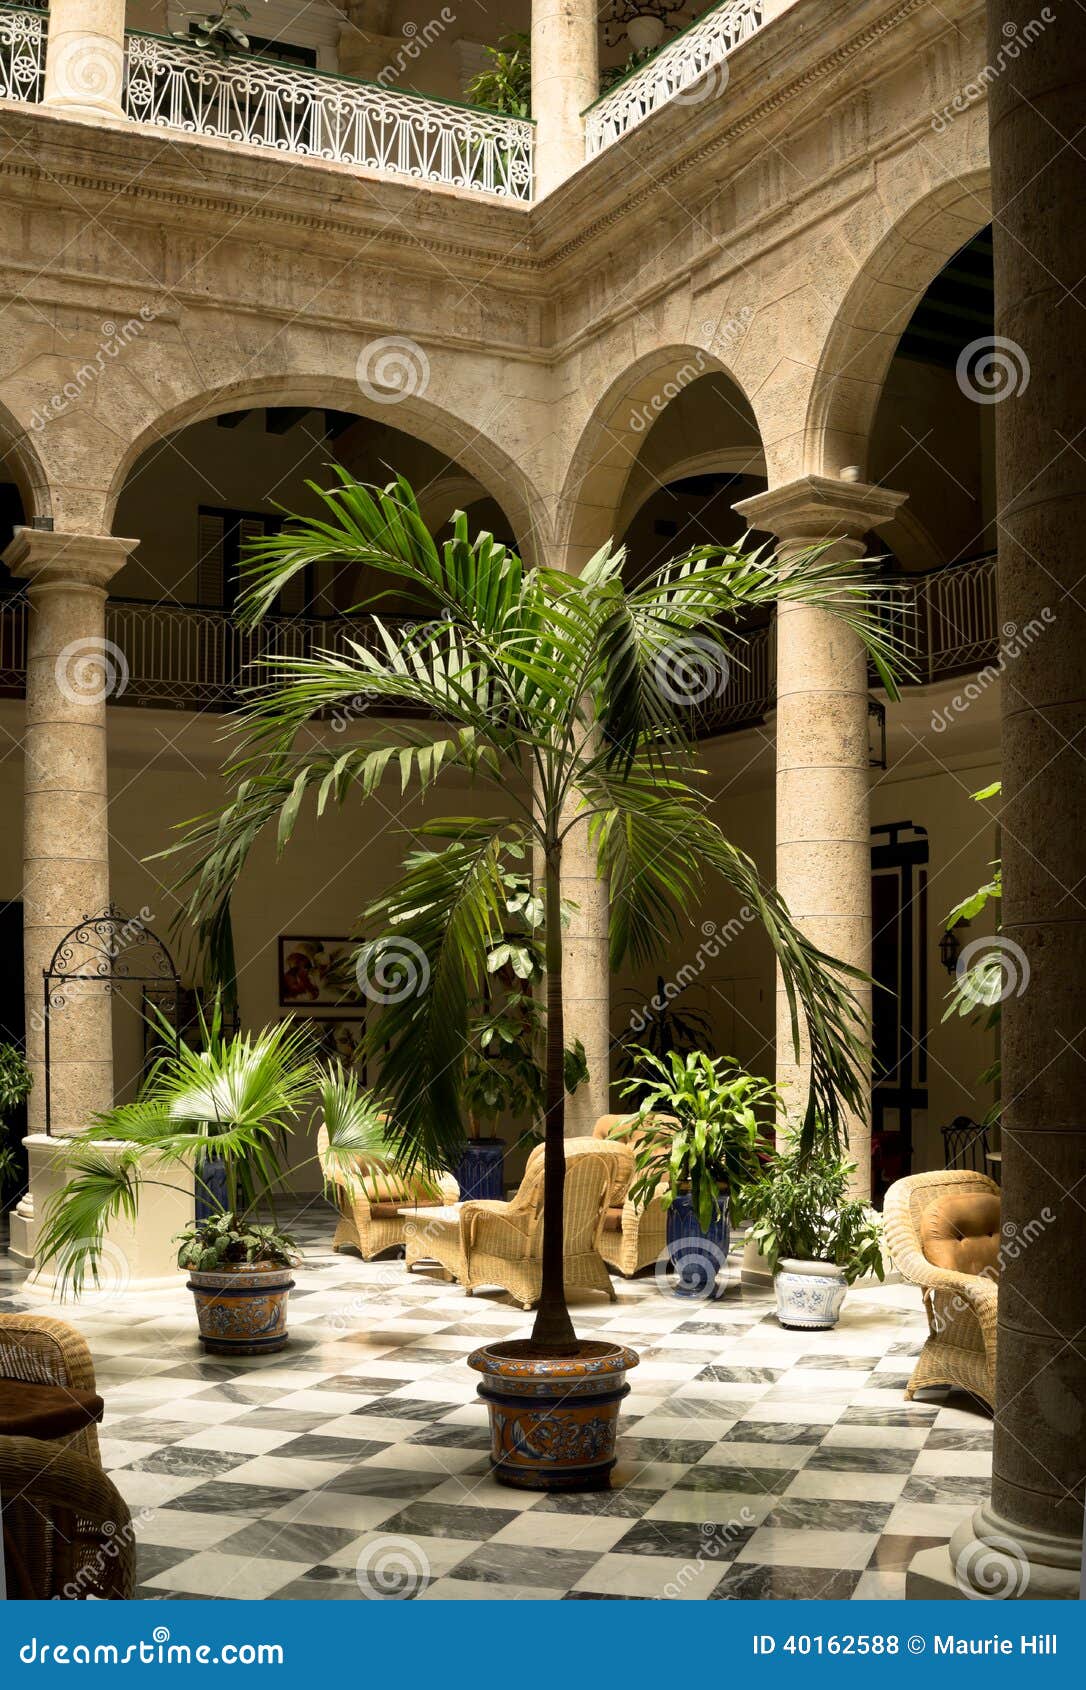 havana cuba, interior courtyard